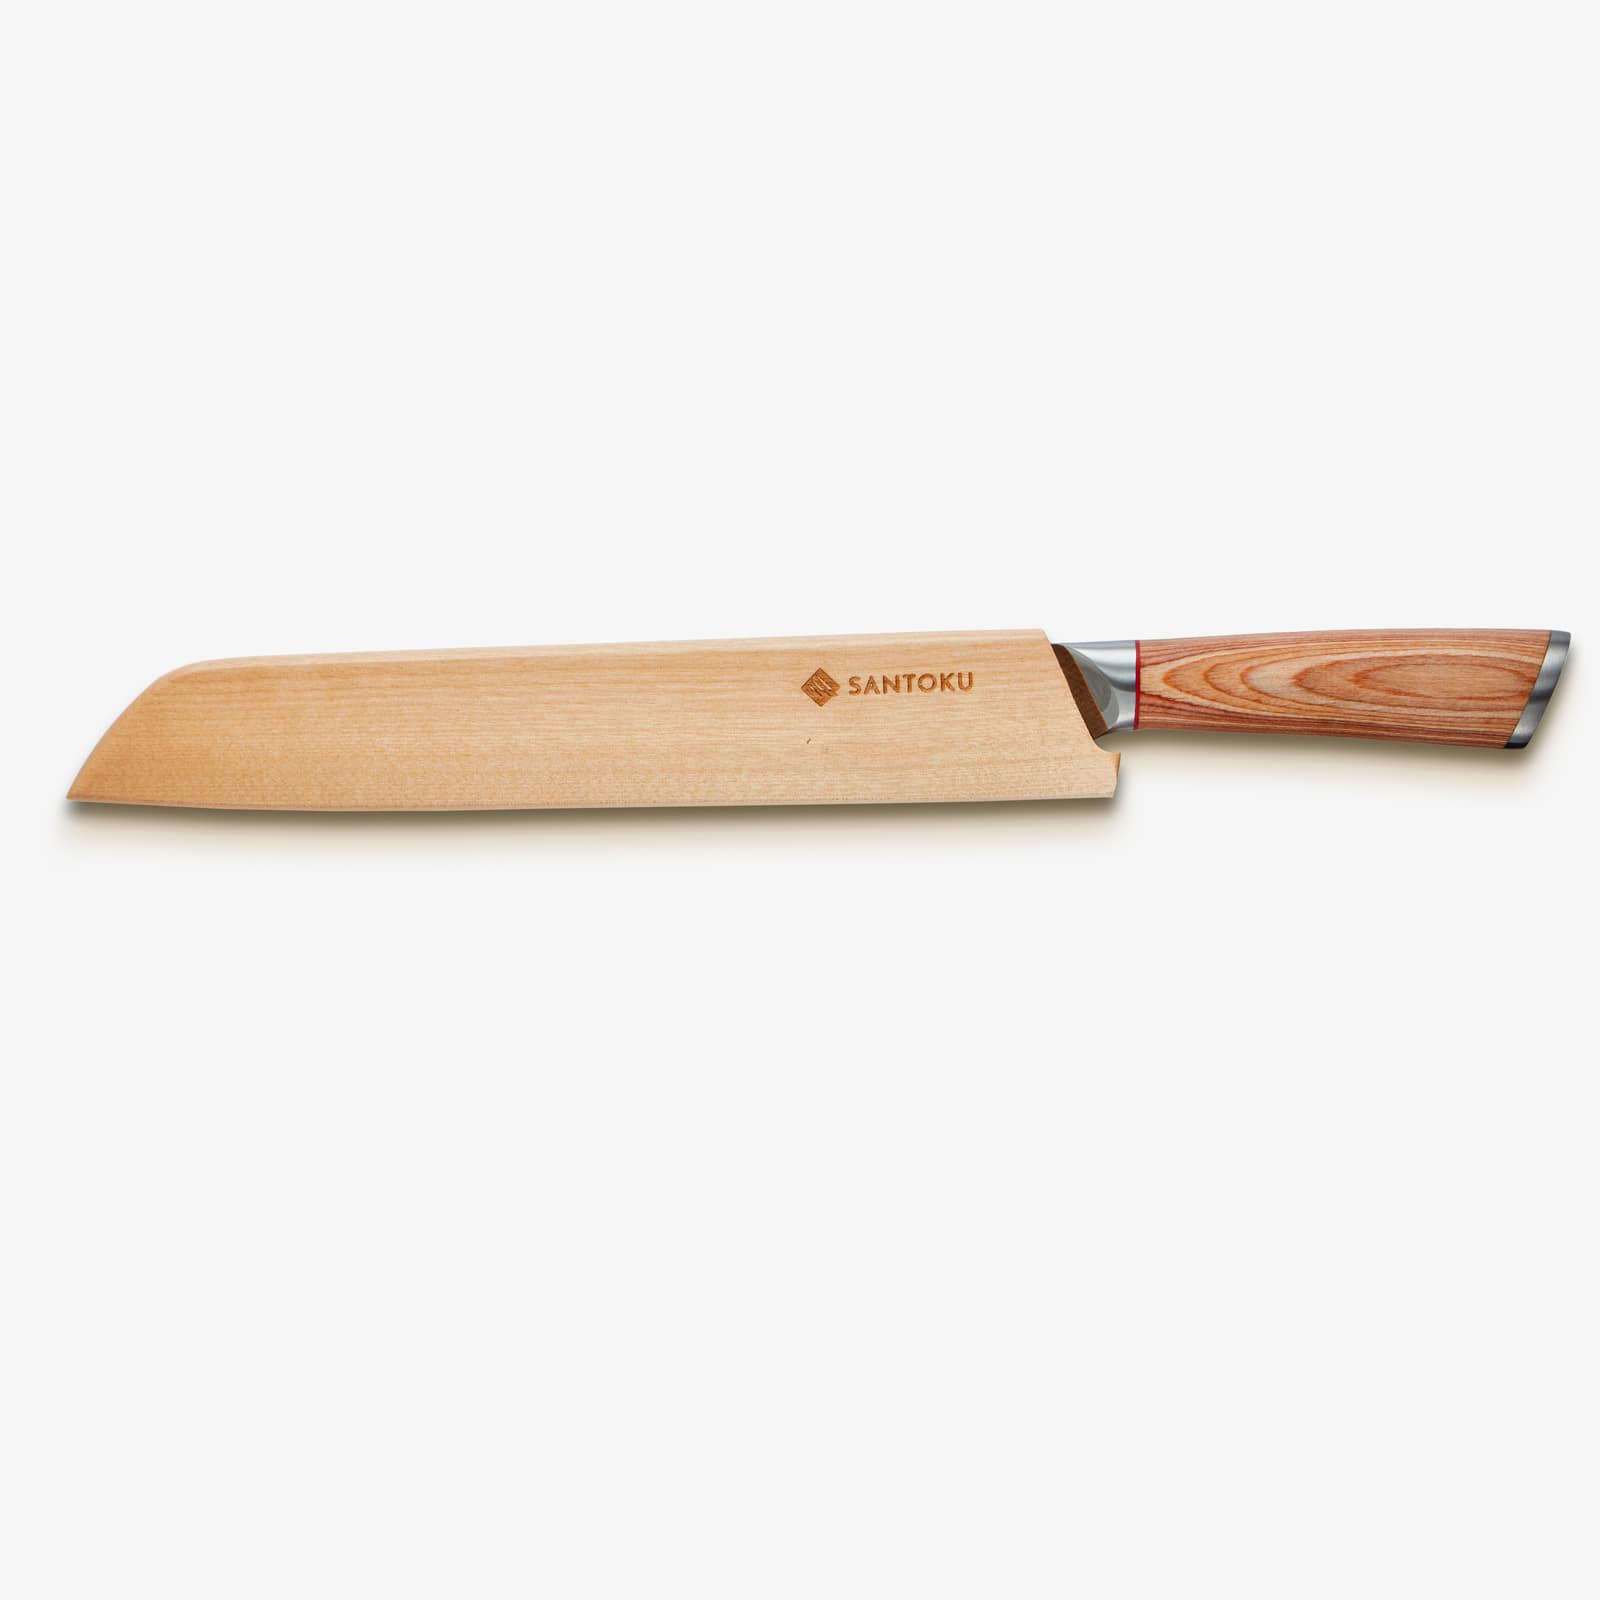 Haruta (はる た) cuțit de pâine de 10 inch